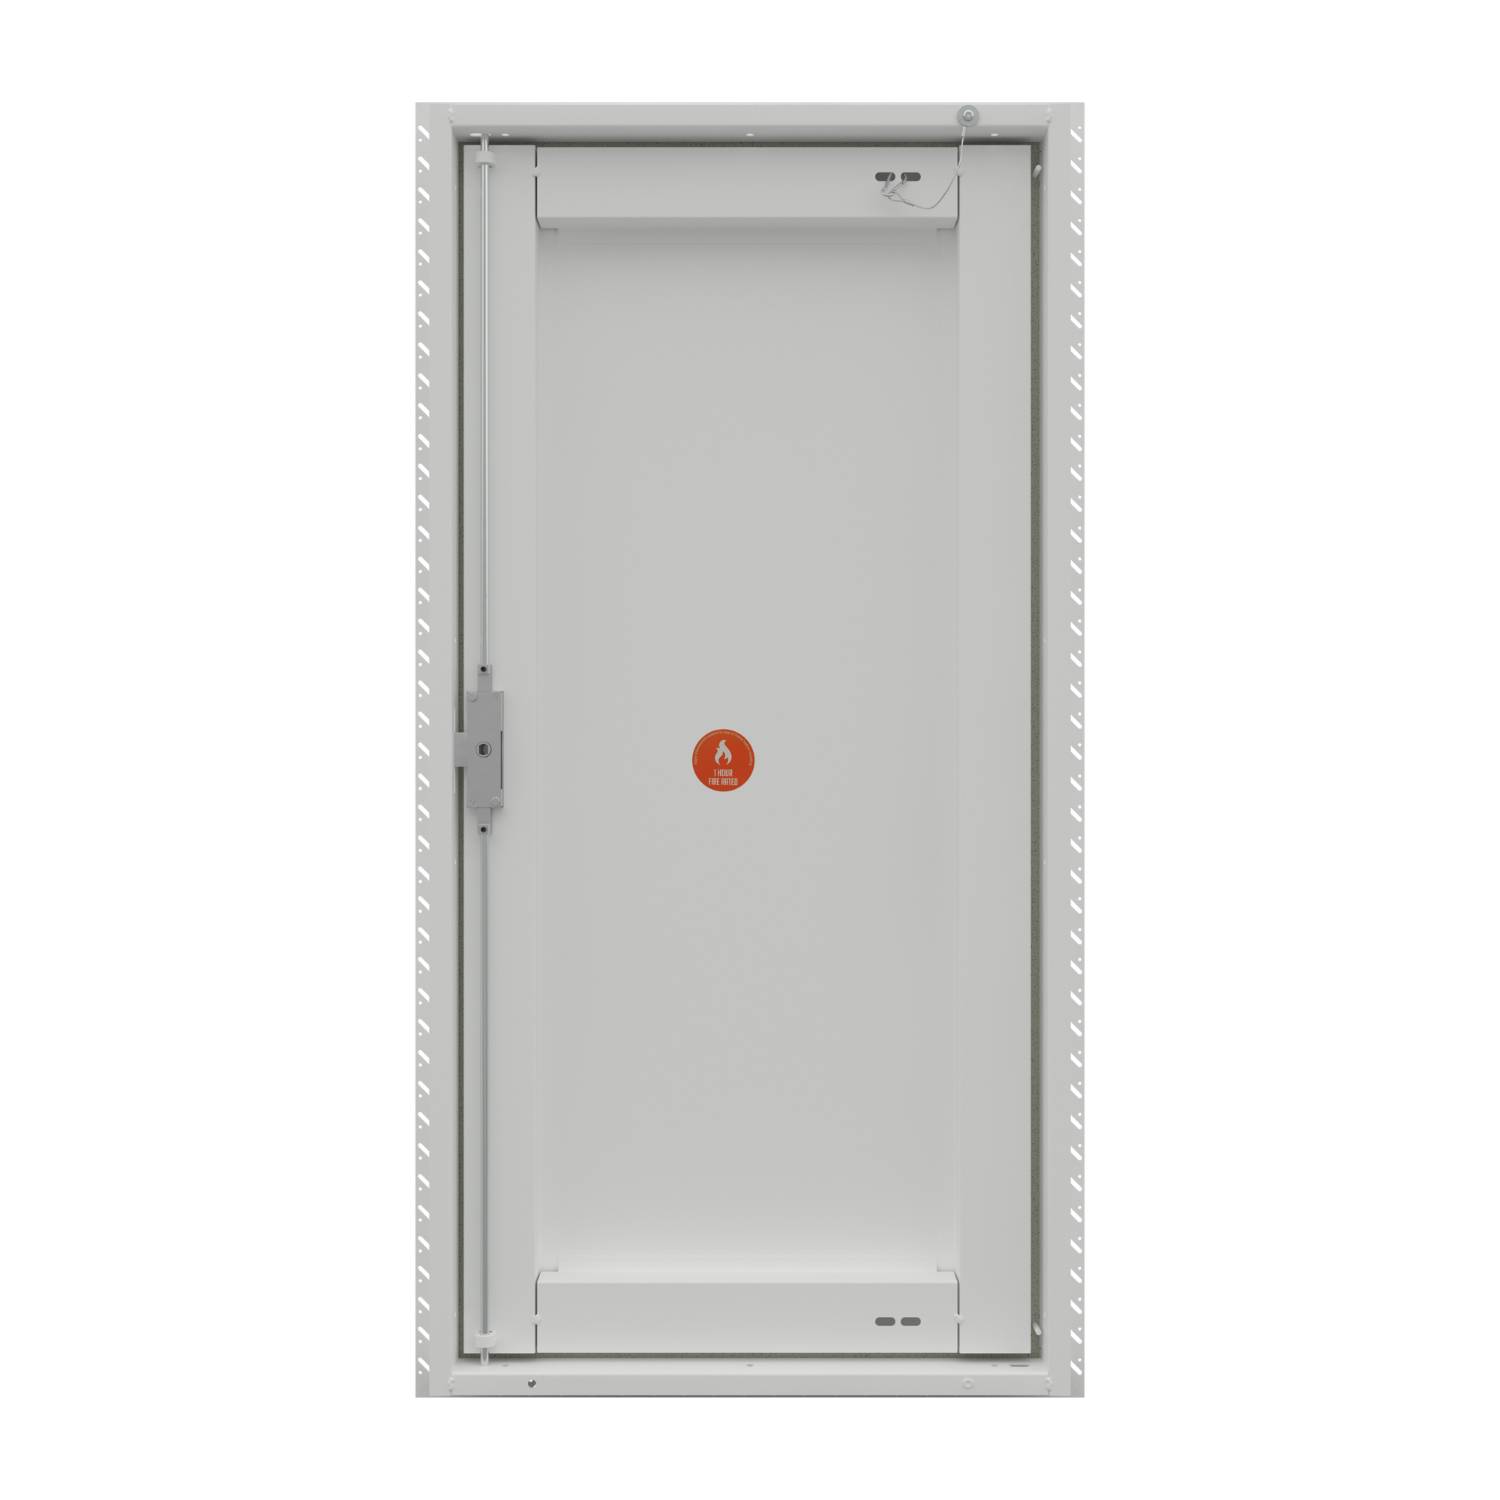 Metal Riser Door - Beaded Frame - R57 Range - Access Panels, Riser Doors